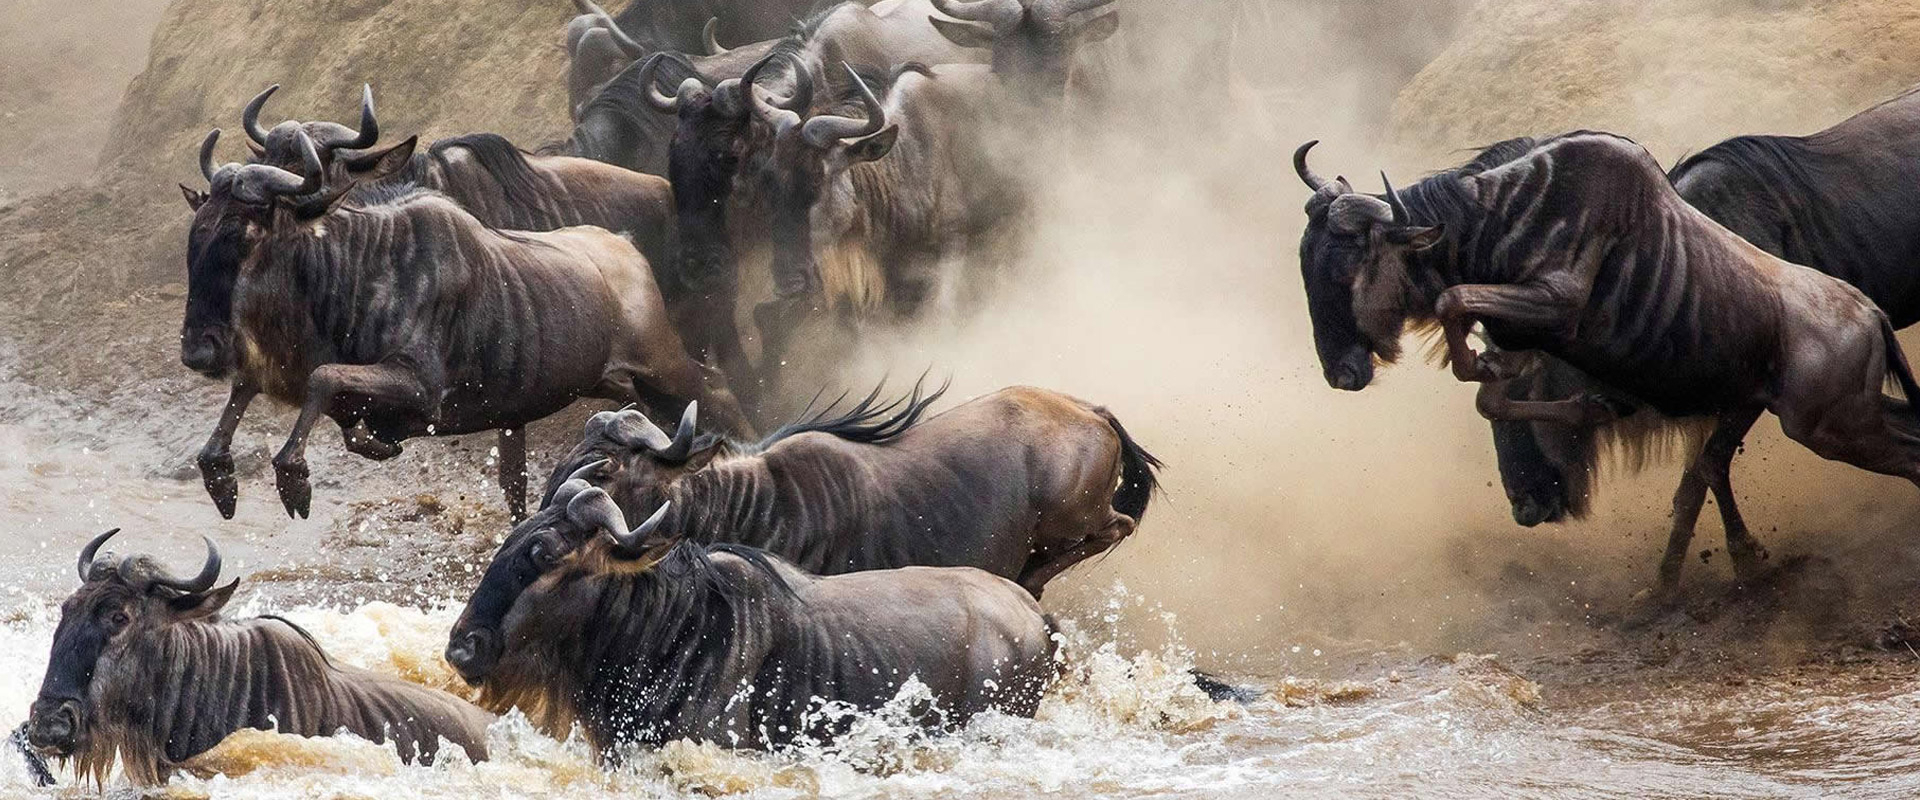 Tanzania Safari Adventure - Serengeti Migration